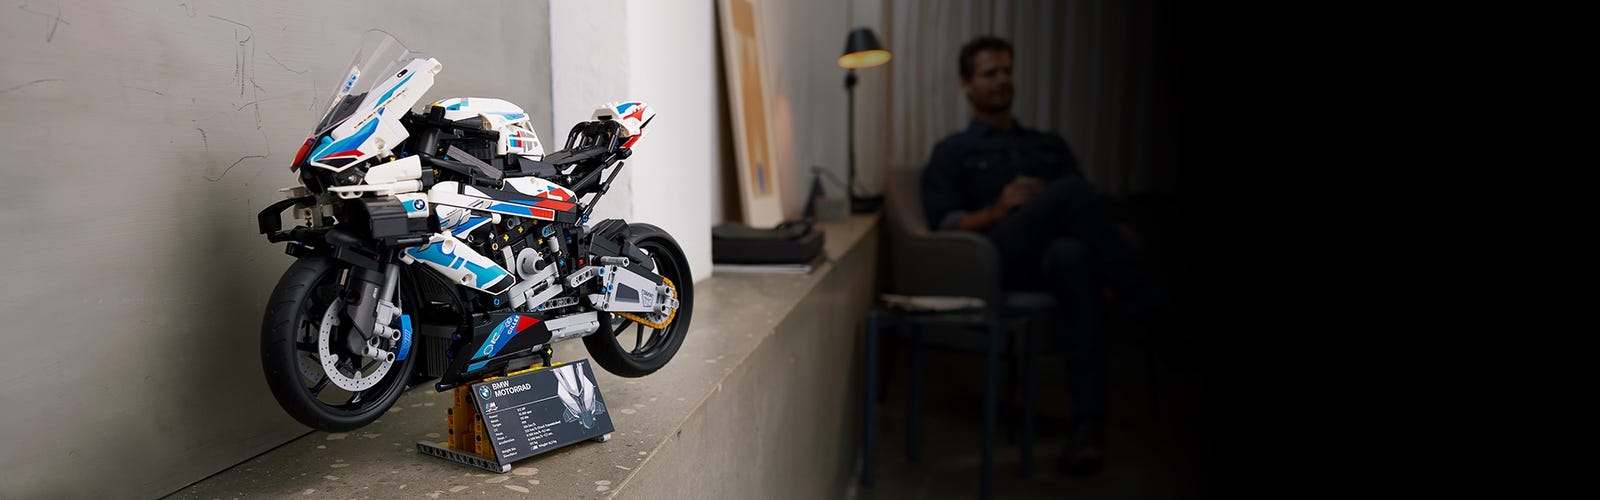 BMW Motorrad Presents the LEGO Technic BMW M 1000 RR - Cycle News